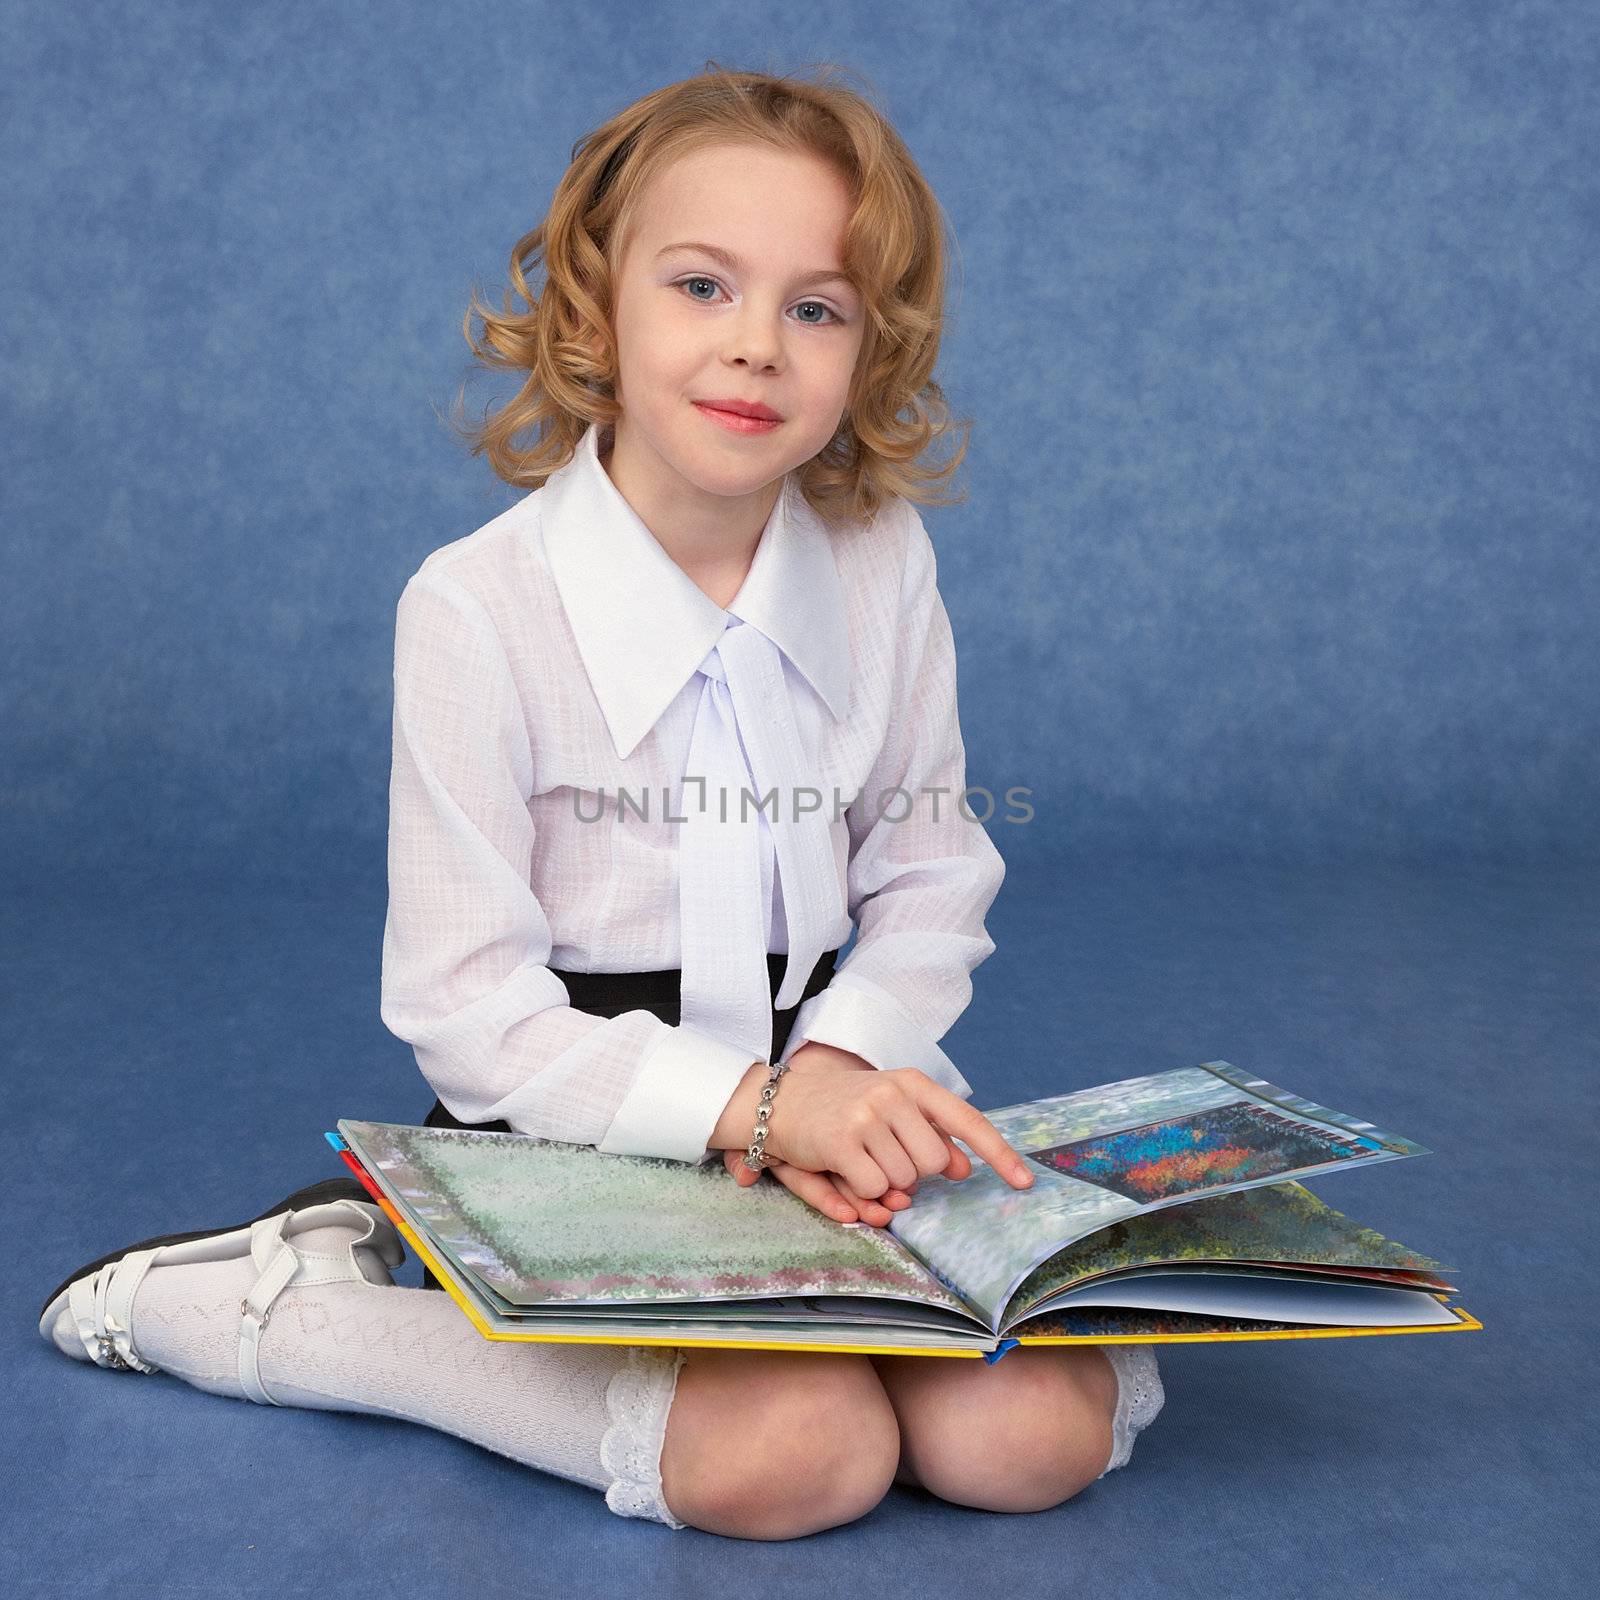 Schoolgirl reading book sitting on floor by pzaxe